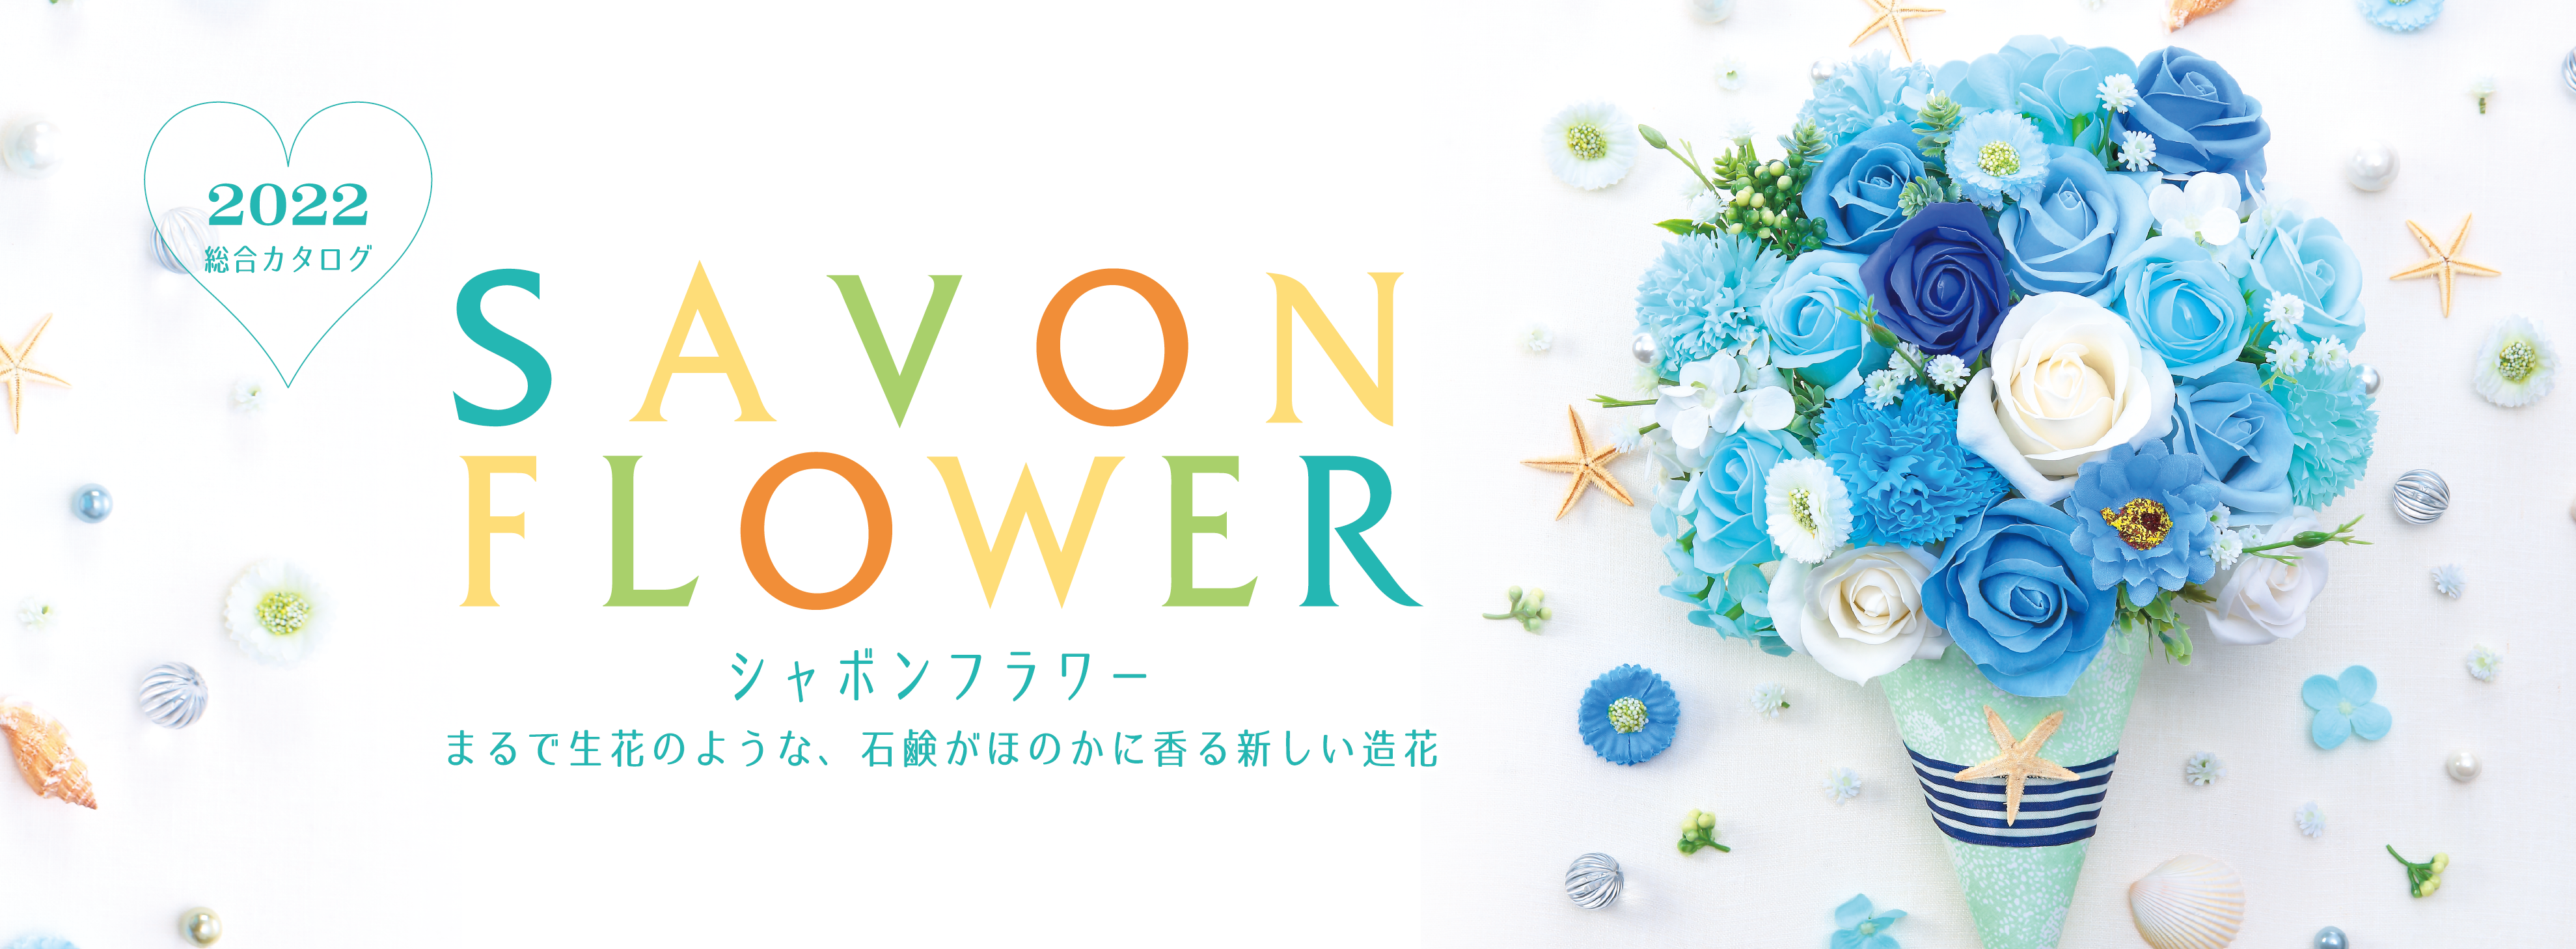 SAVON FLOWER 総合カタログ2021